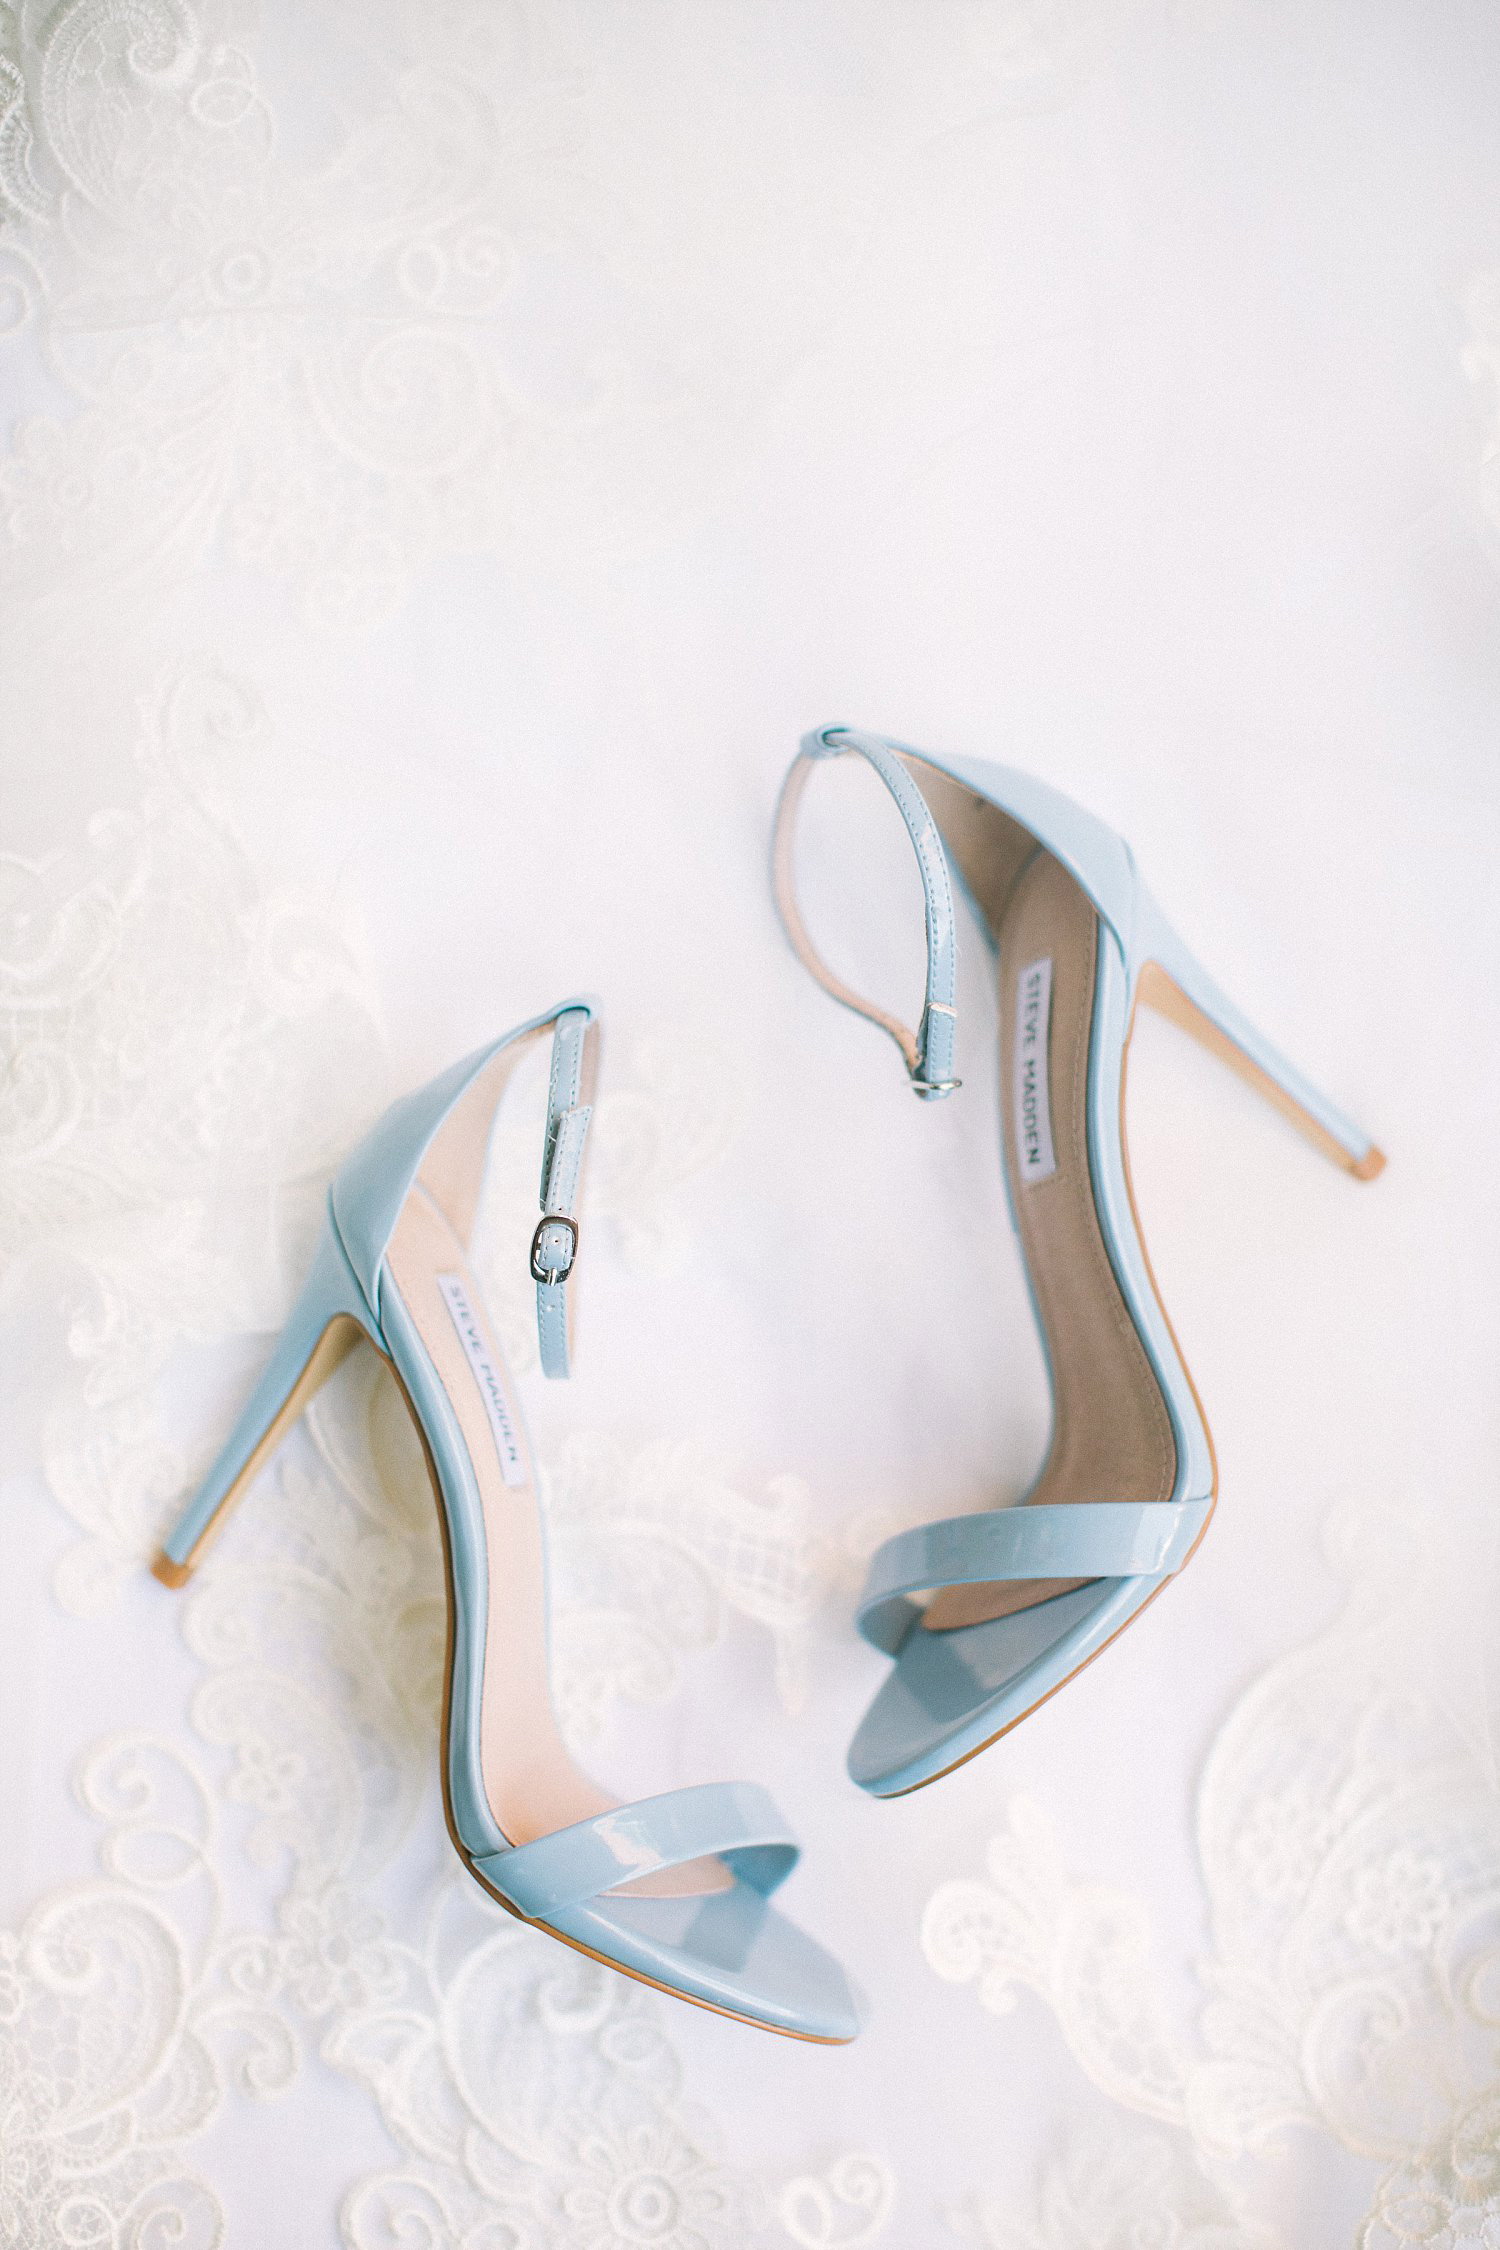 Light blue wedding shoes